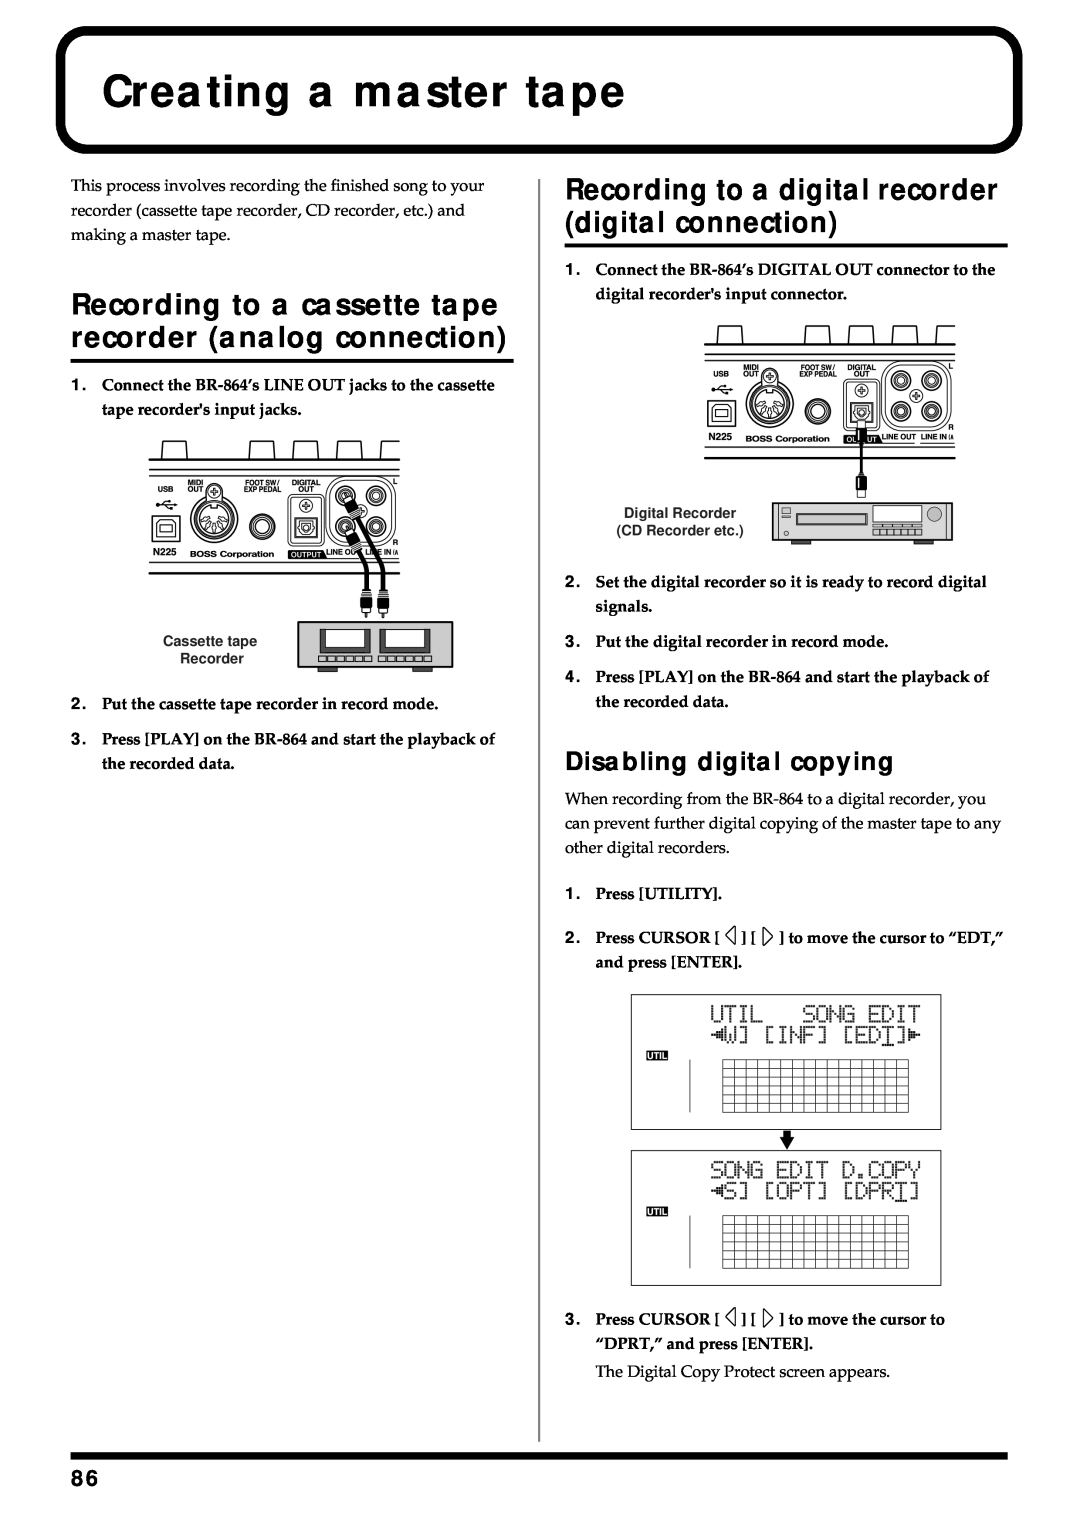 Roland BR-864 owner manual Creating a master tape, Disabling digital copying 